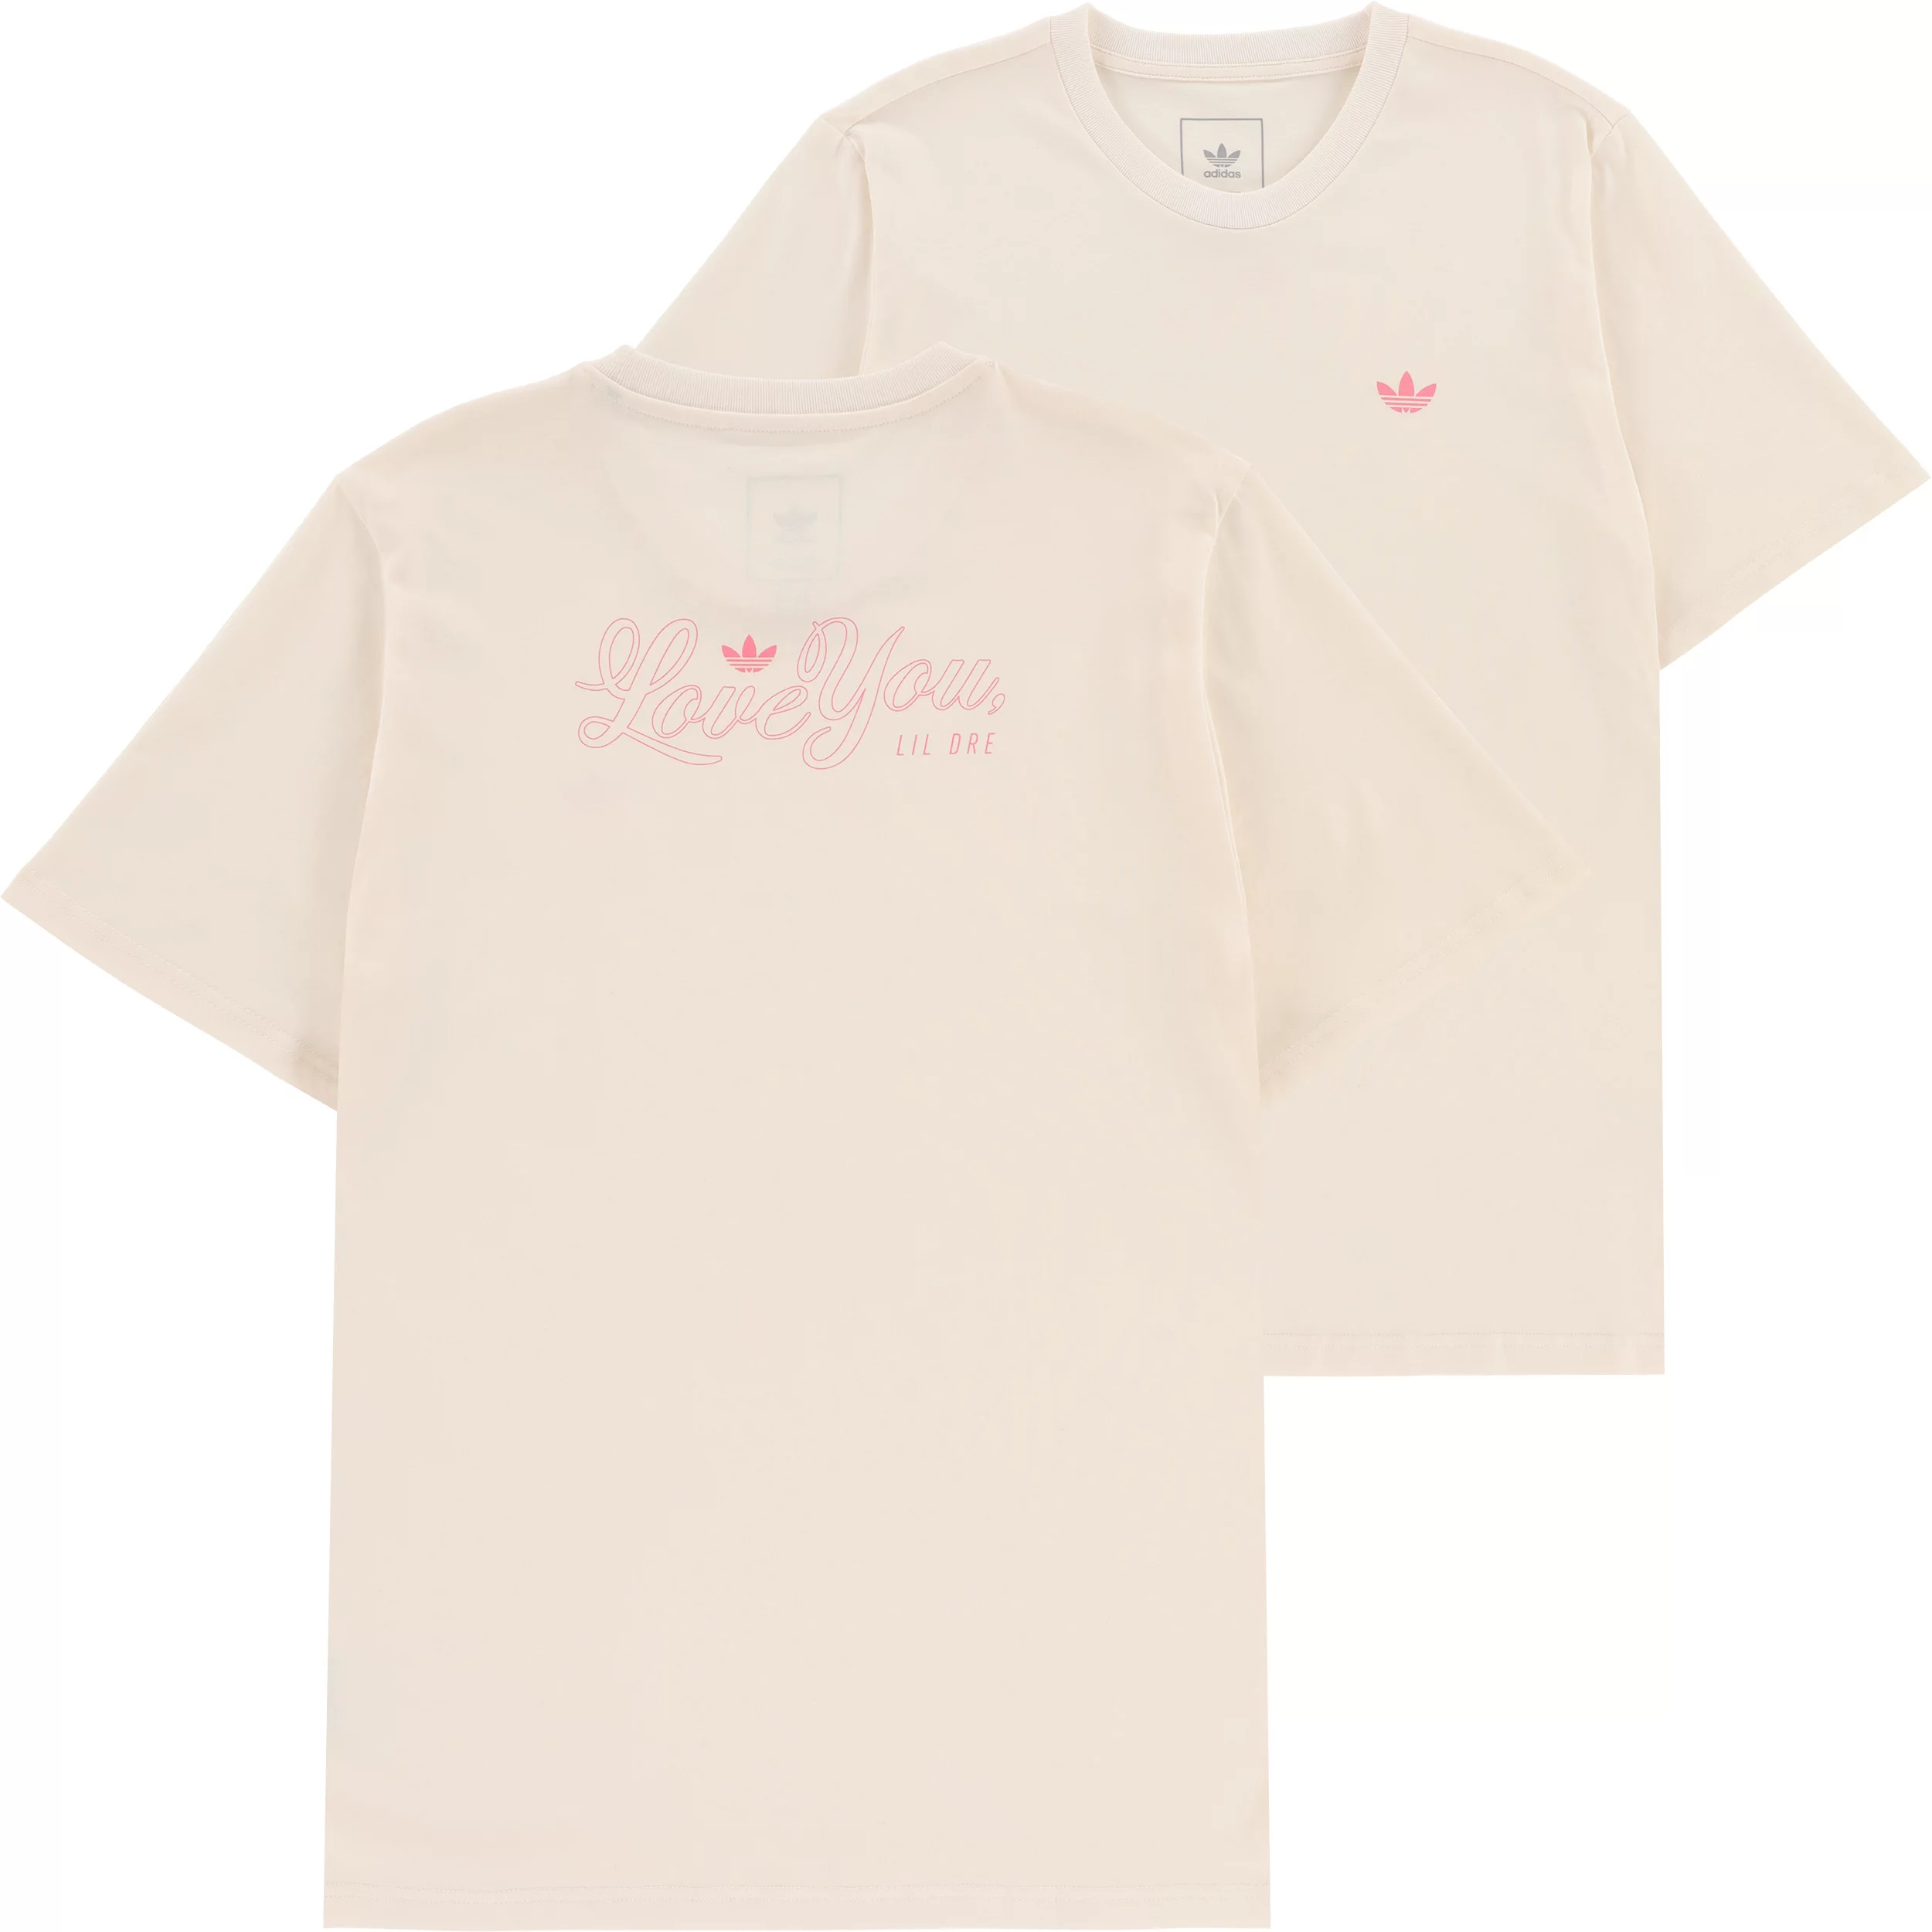 Adidas Lil Tactics Dre white/bliss | - T-Shirt pink chalk Message